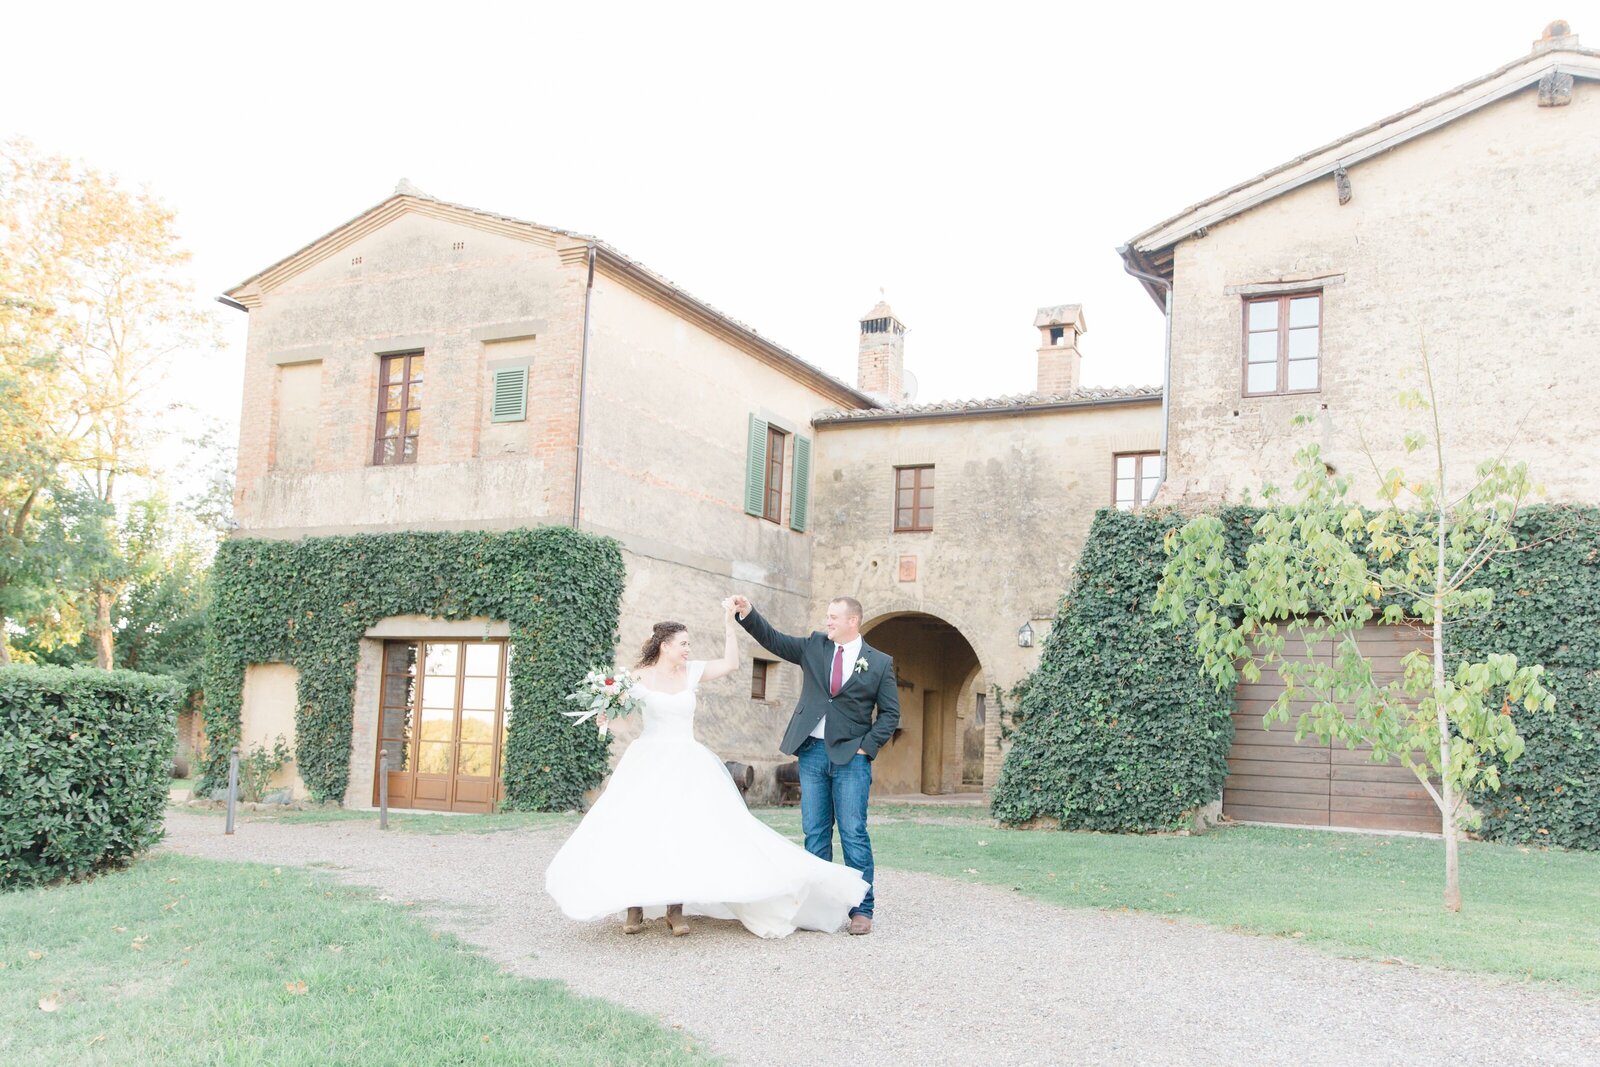 erica-lauren-photography-stacey-lance-tuscany-italy-wedding-sept-05-2020-186